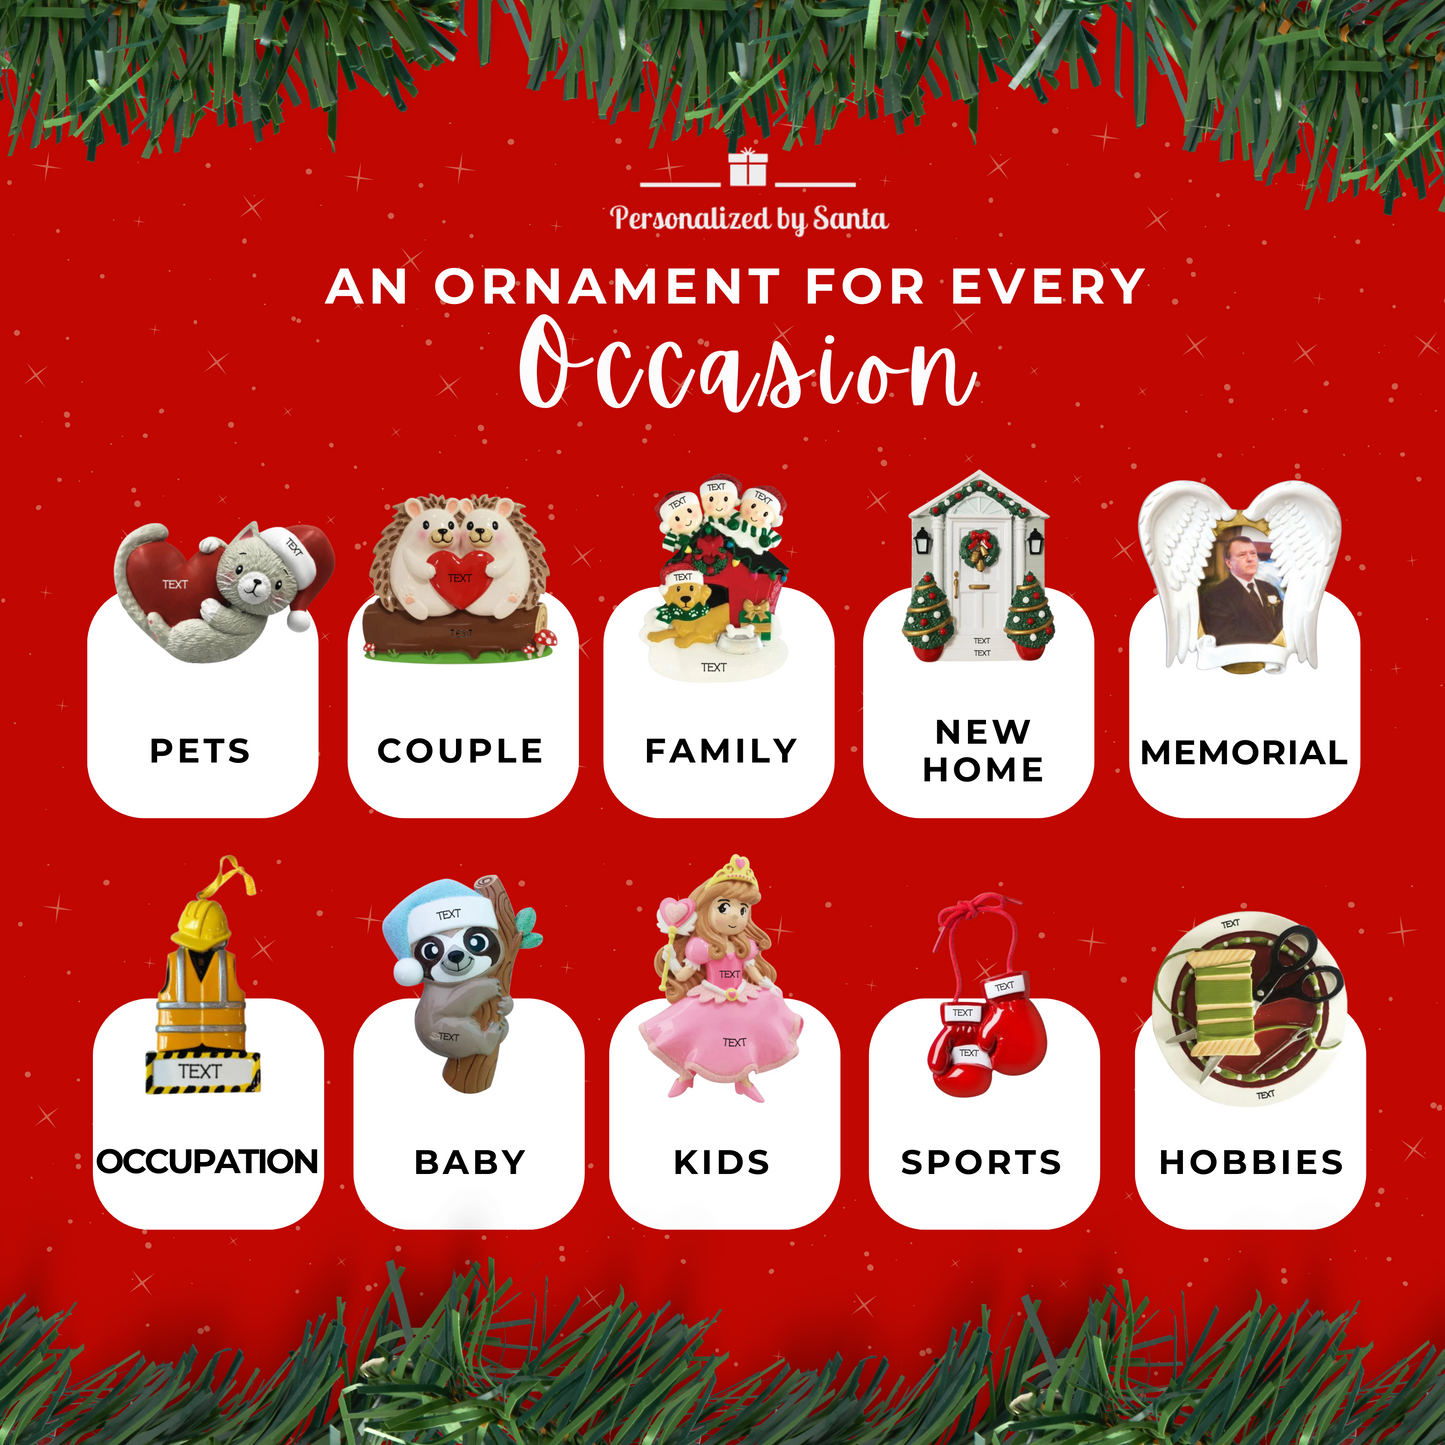 Christmas Sweater Penguin Family of 5 Ornament